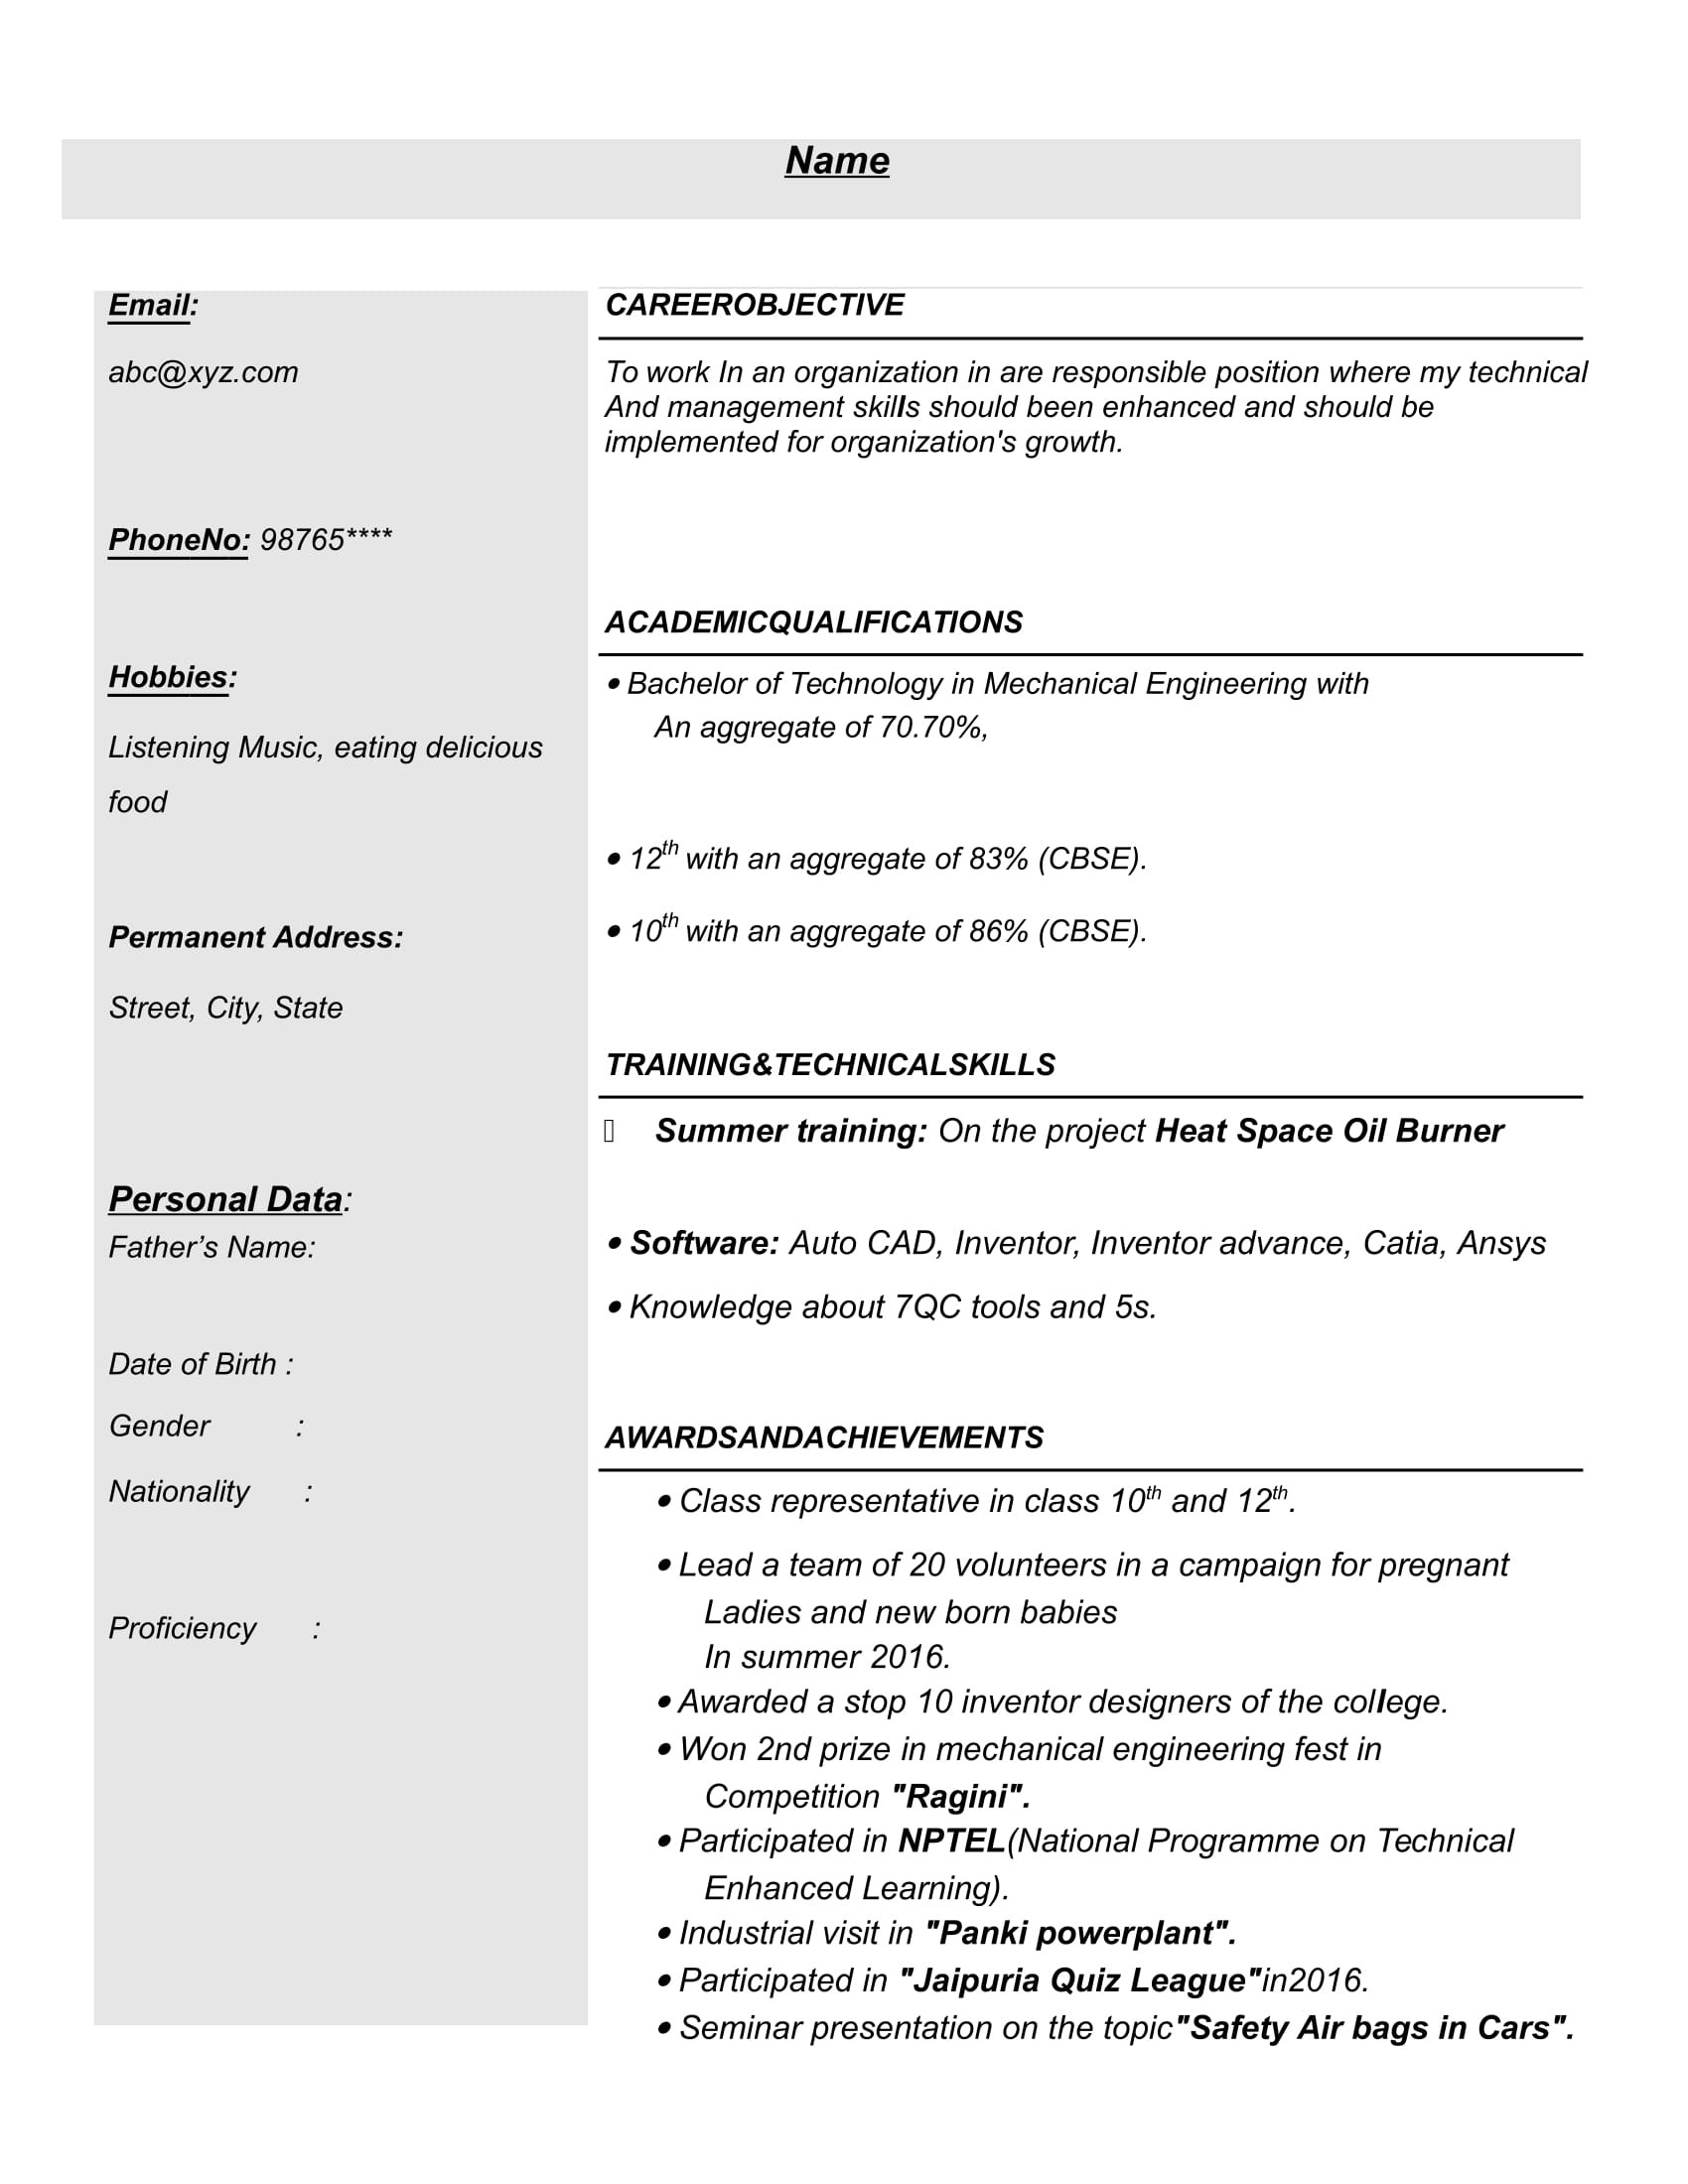 sunk resume format for mechanical engineer fresher pdf oL